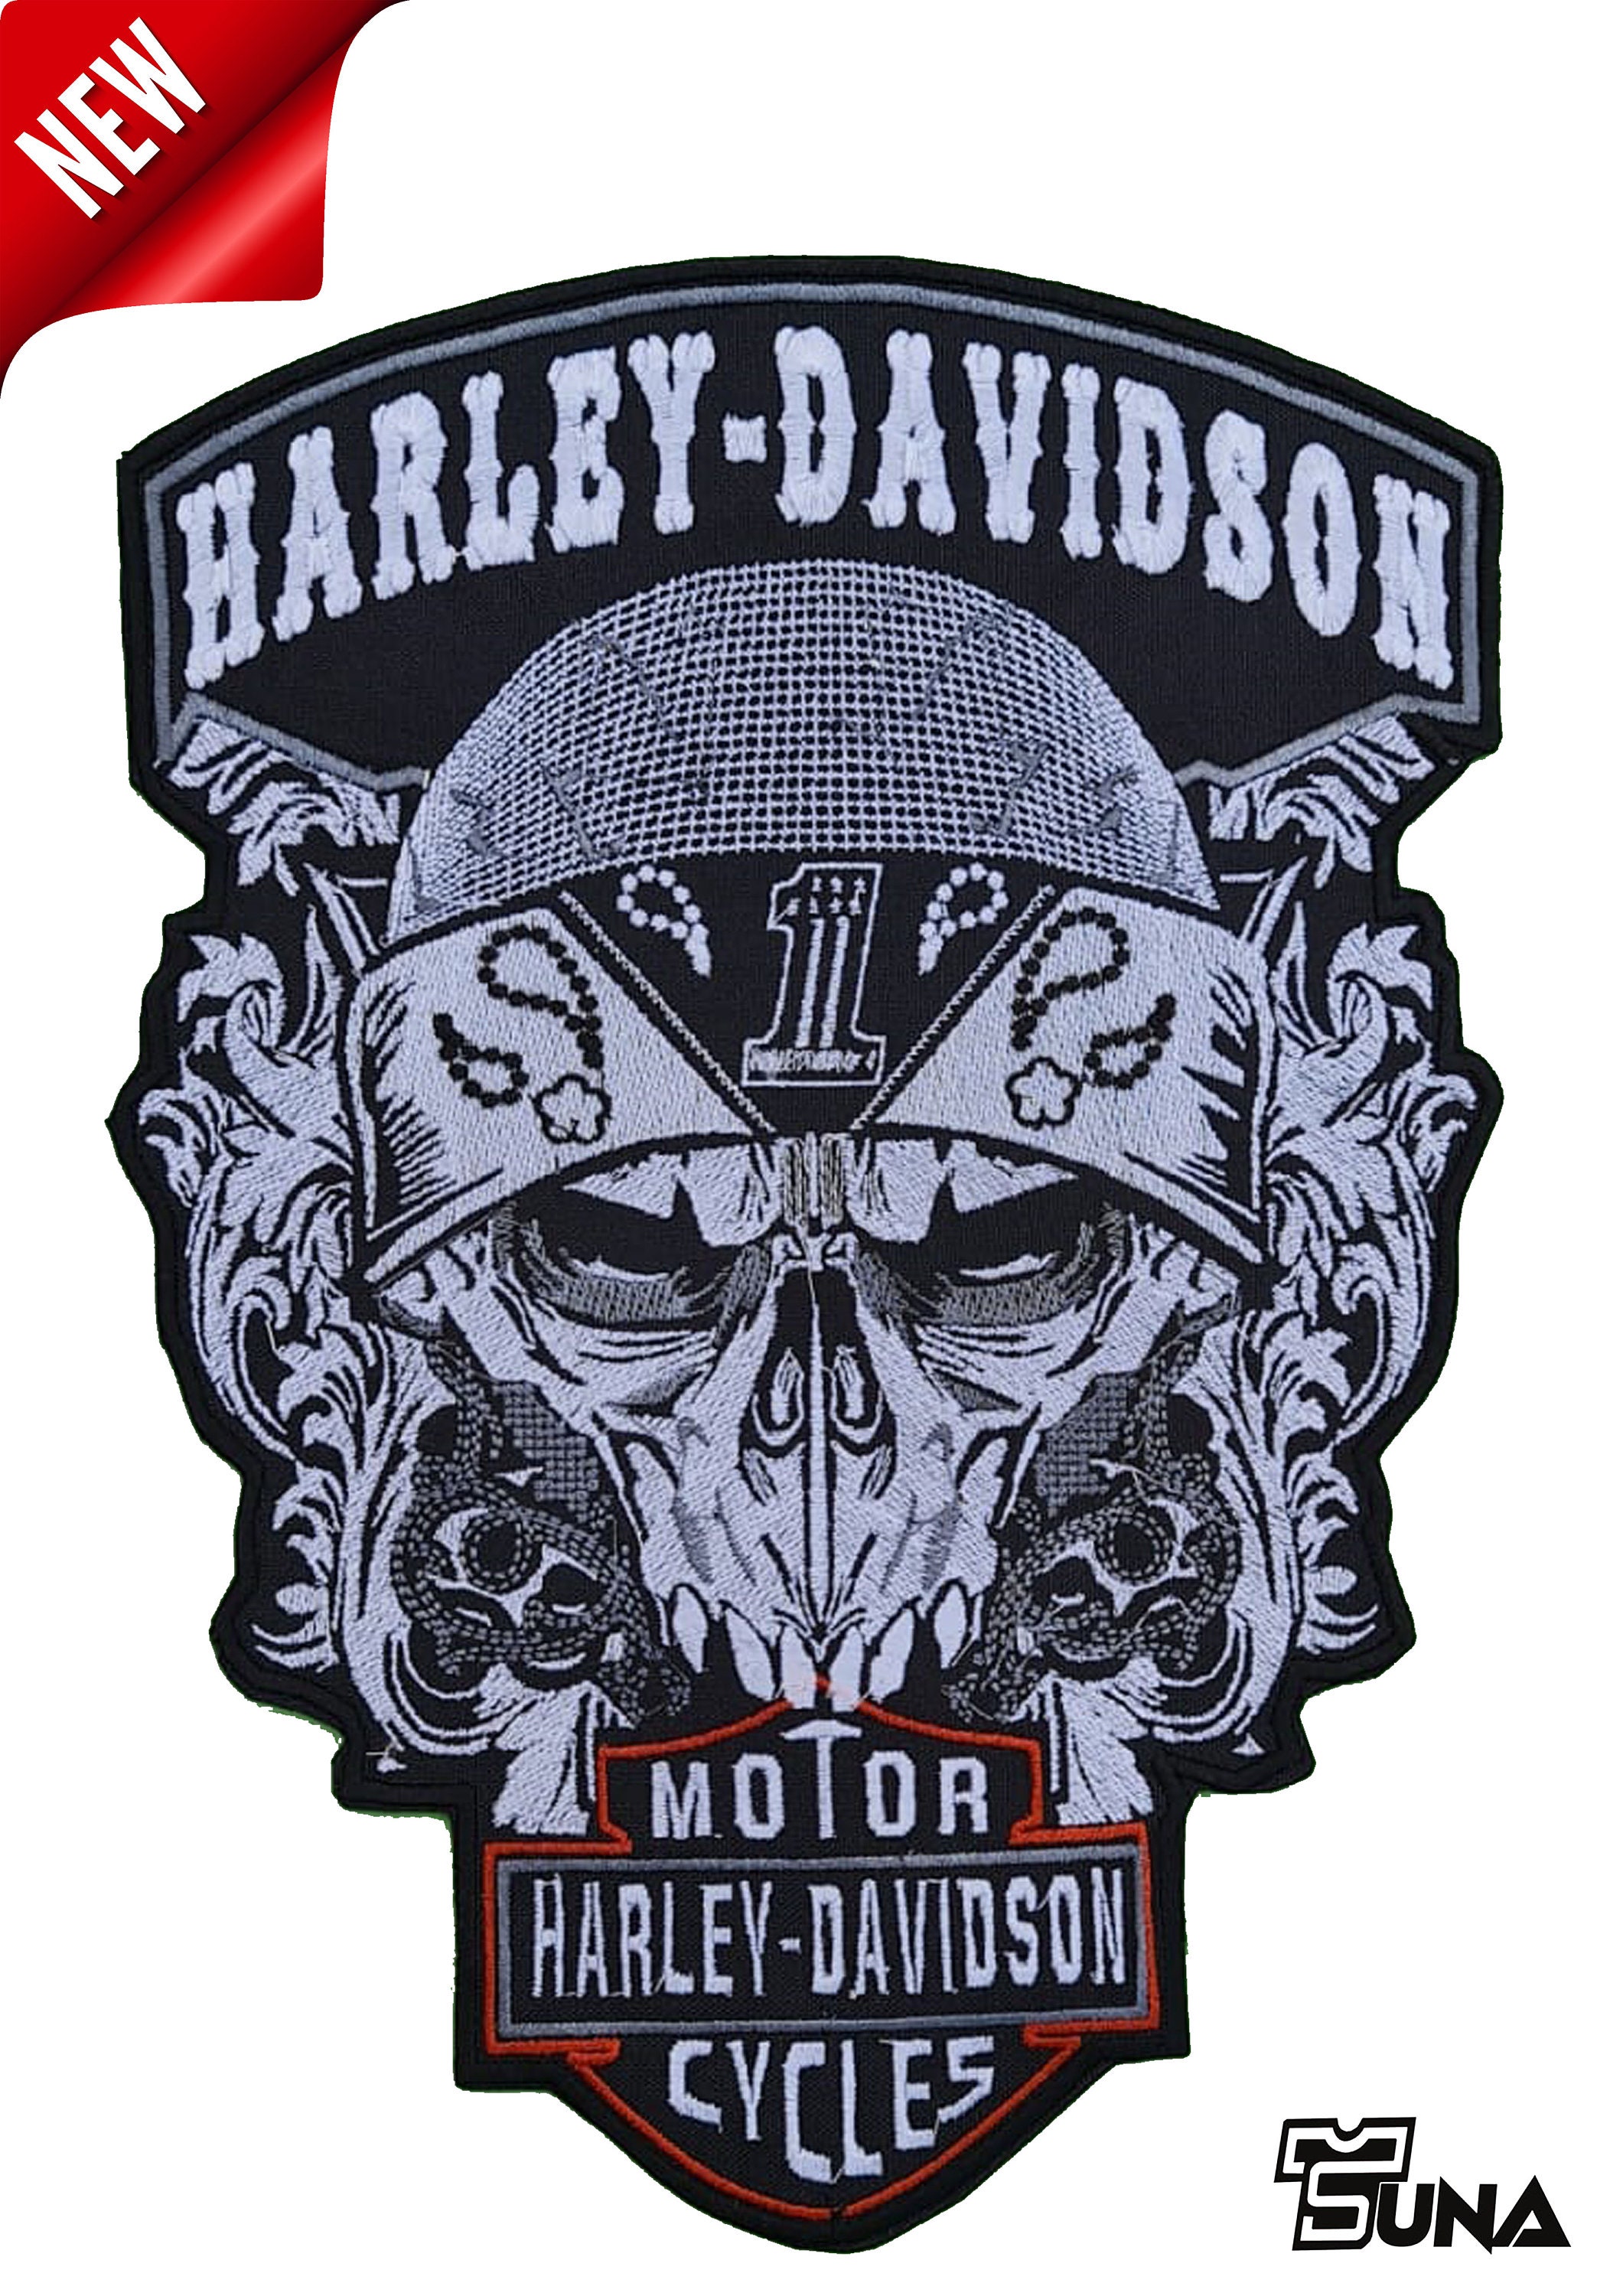 NEW Harley Davidson Patch BAR & SHIELD size 4x3.5 & BAR 4x1 inch Iron On  Patch